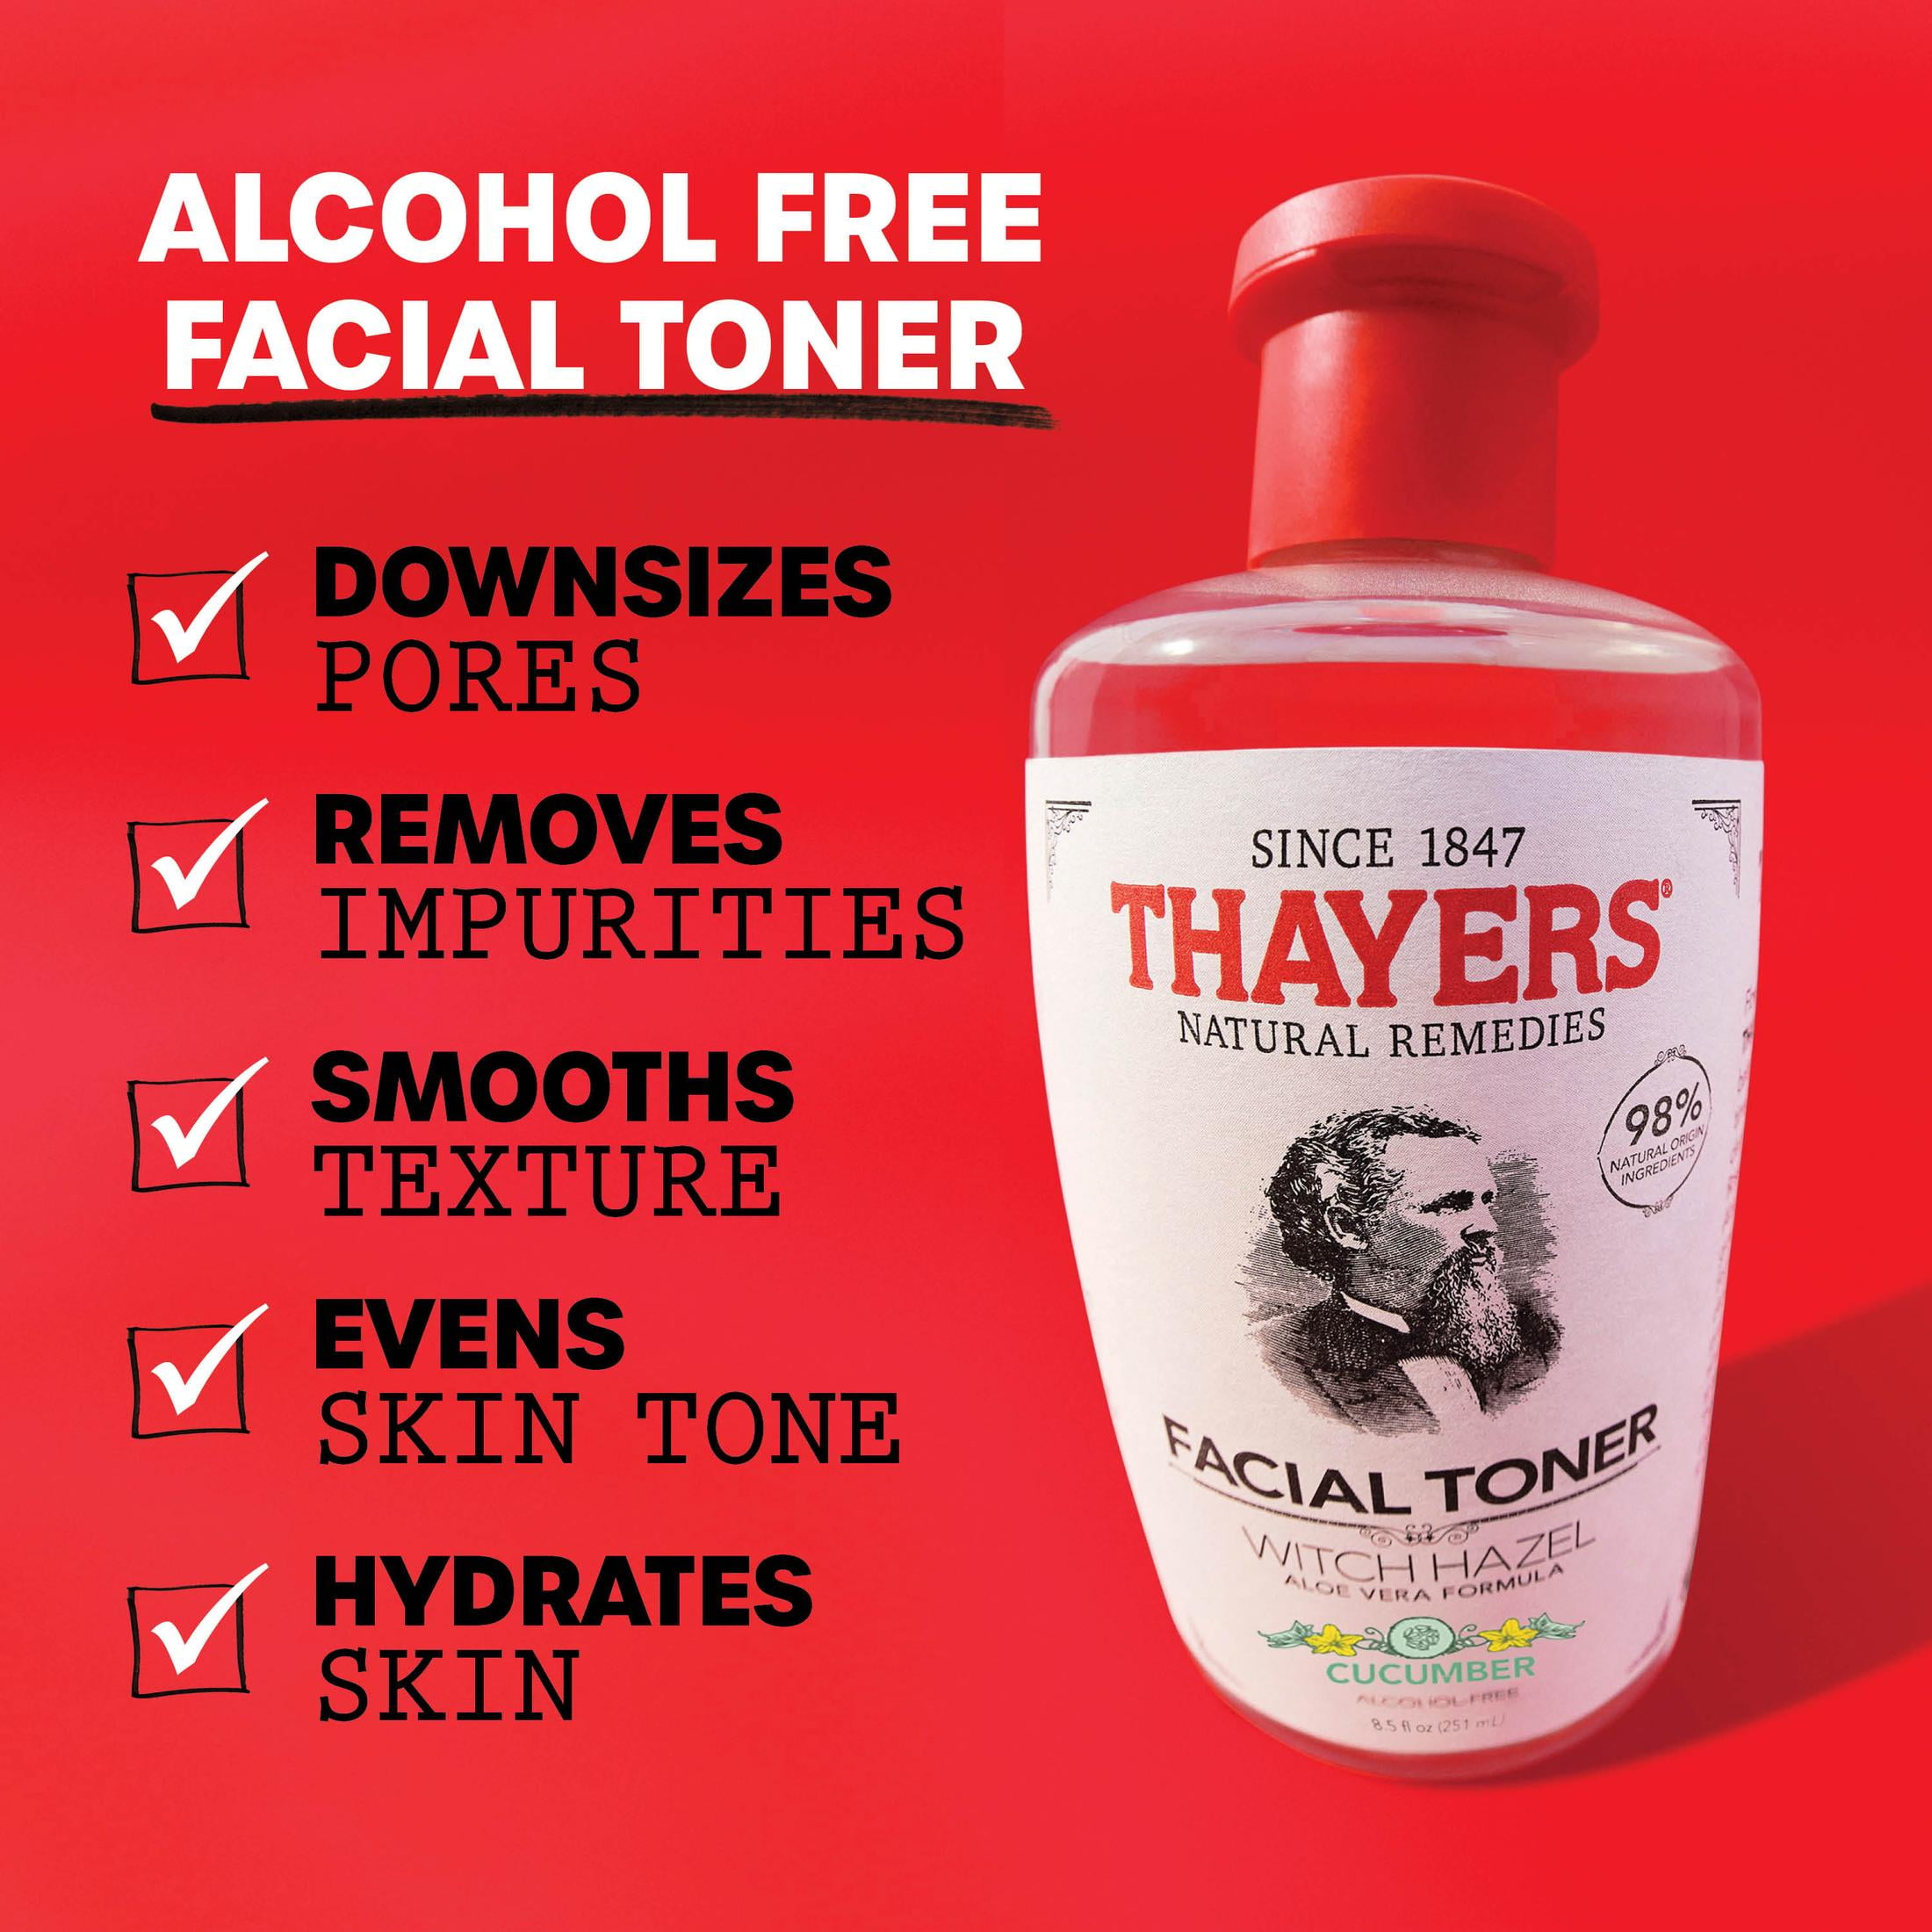 Thayers Alcohol-Free Cucumber Witch Hazel Facial Toner, 8.5 oz